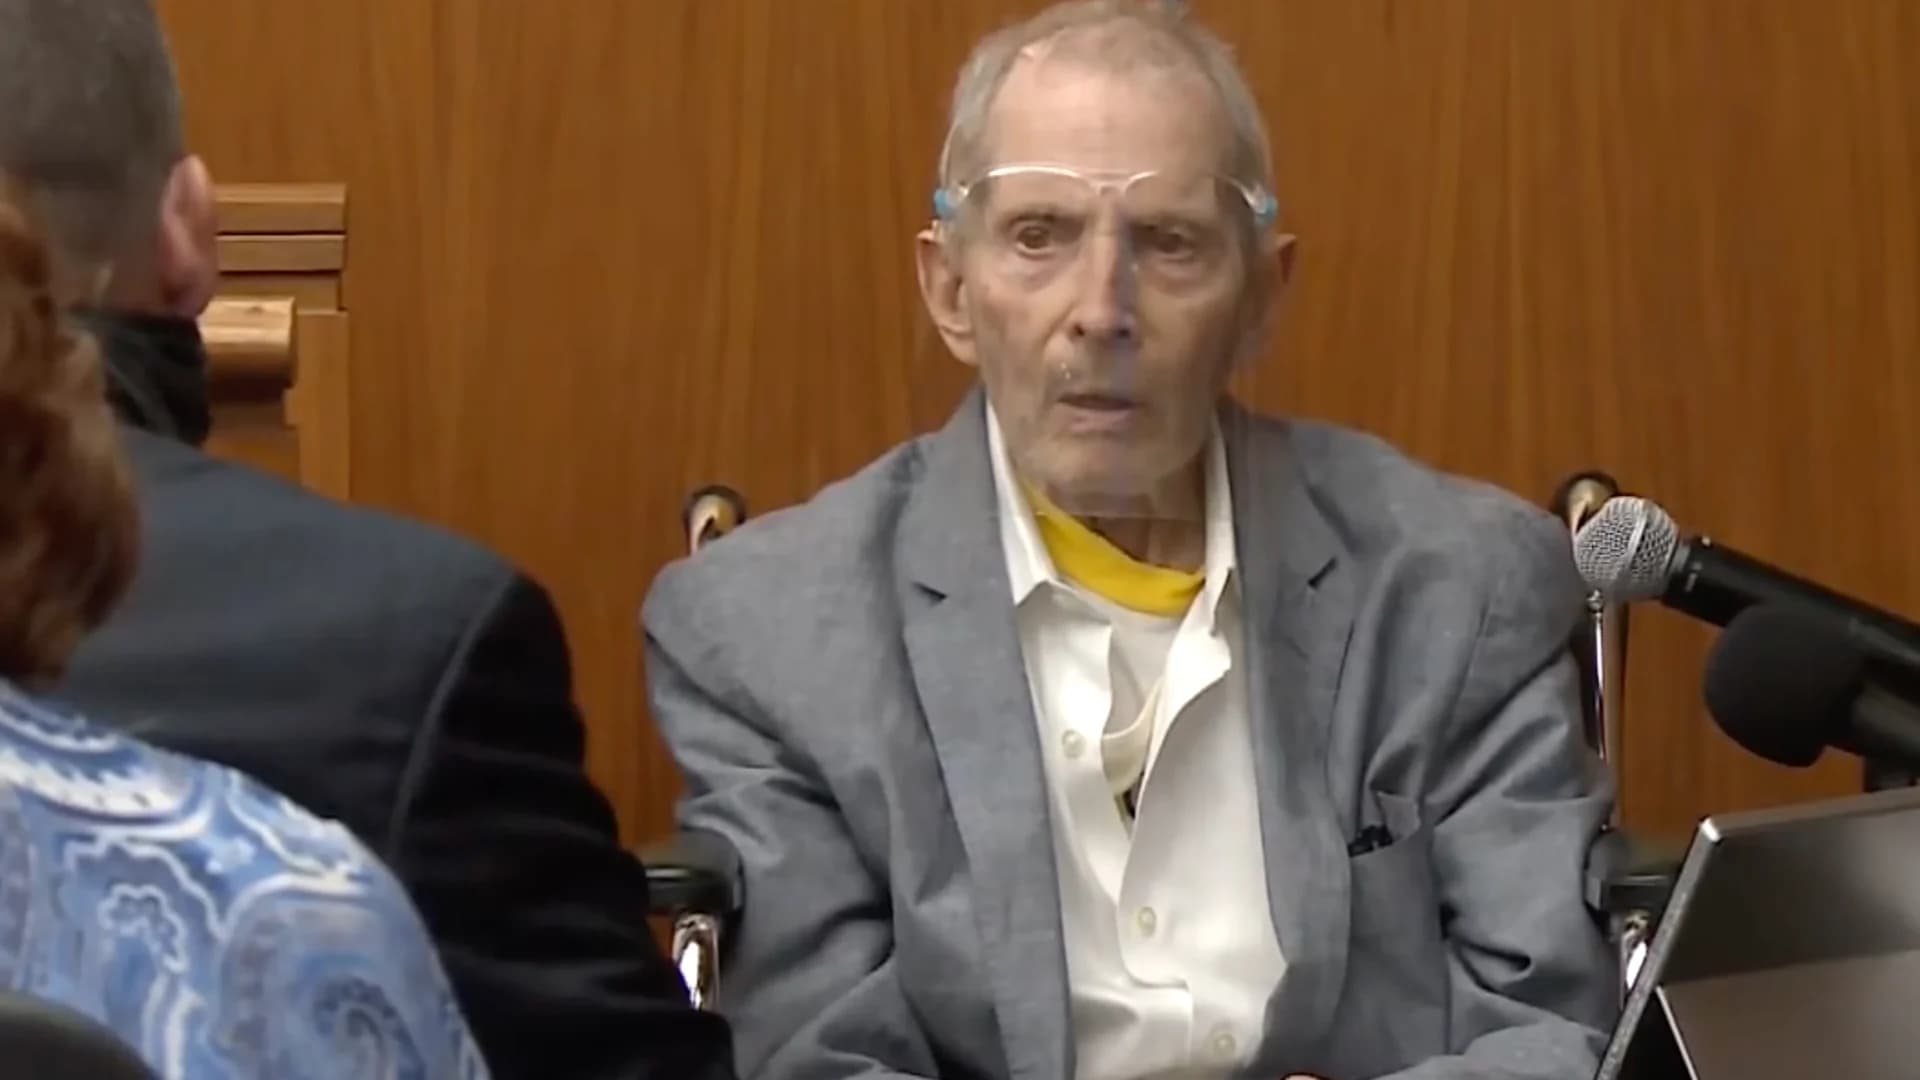 Jury weighing fate of Robert Durst after long murder trial